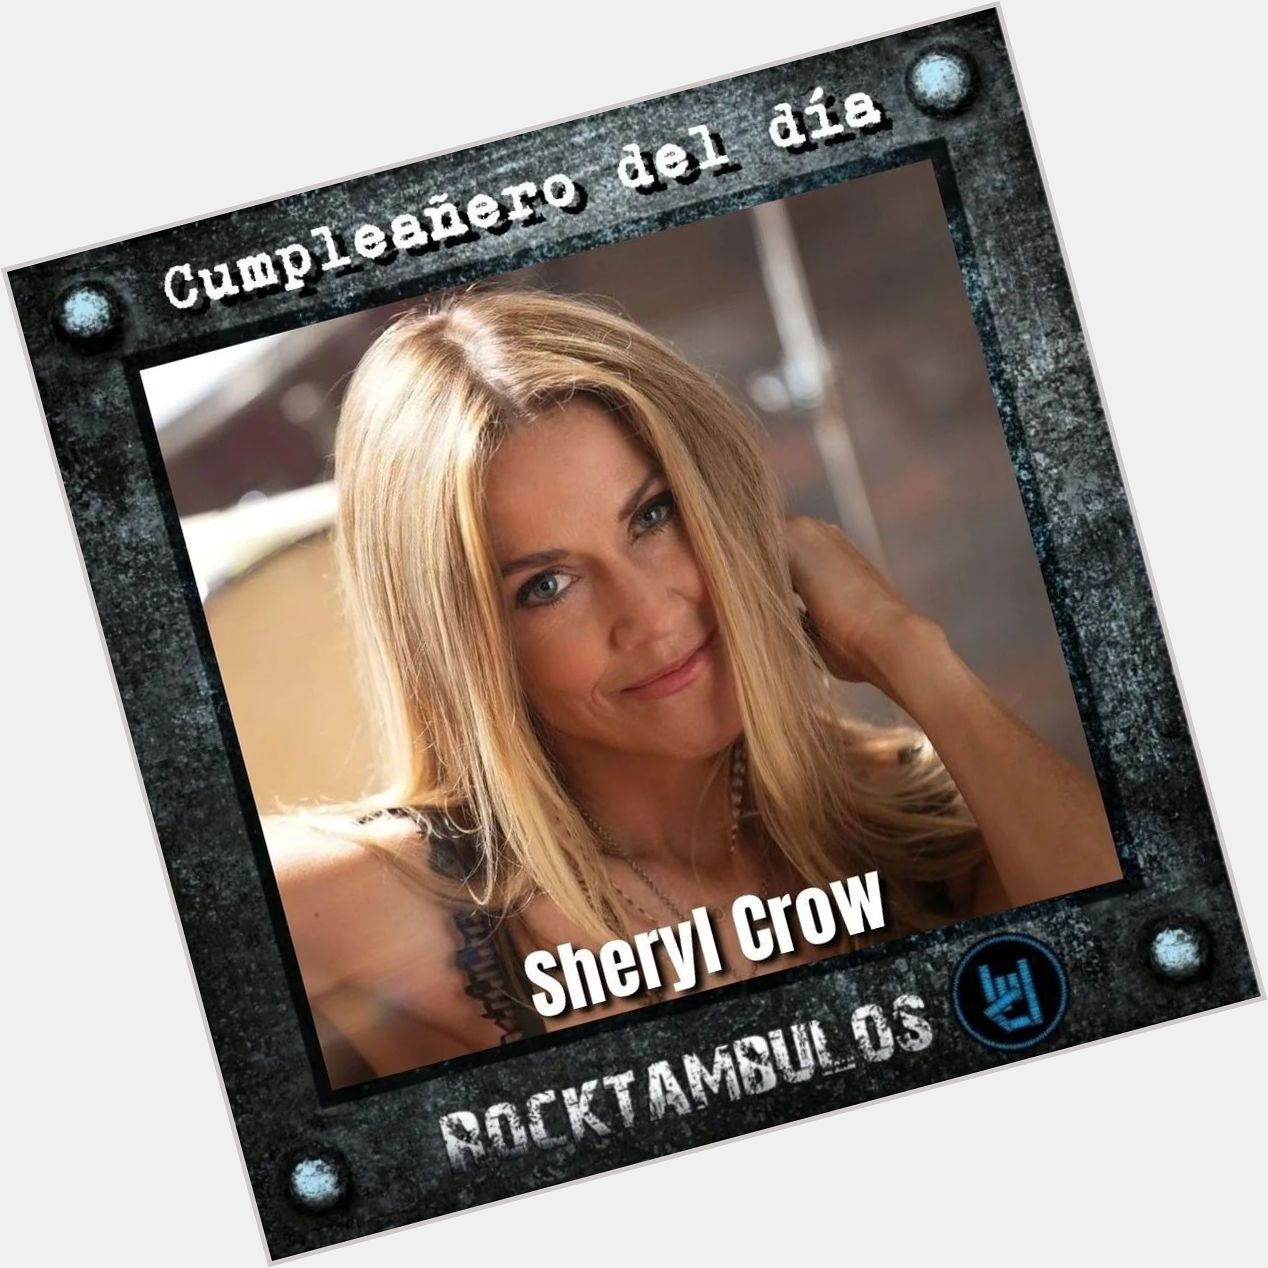 La talentosa Sheryl Crow está de cumpleaños hoy  Happy birthday Sheryl 